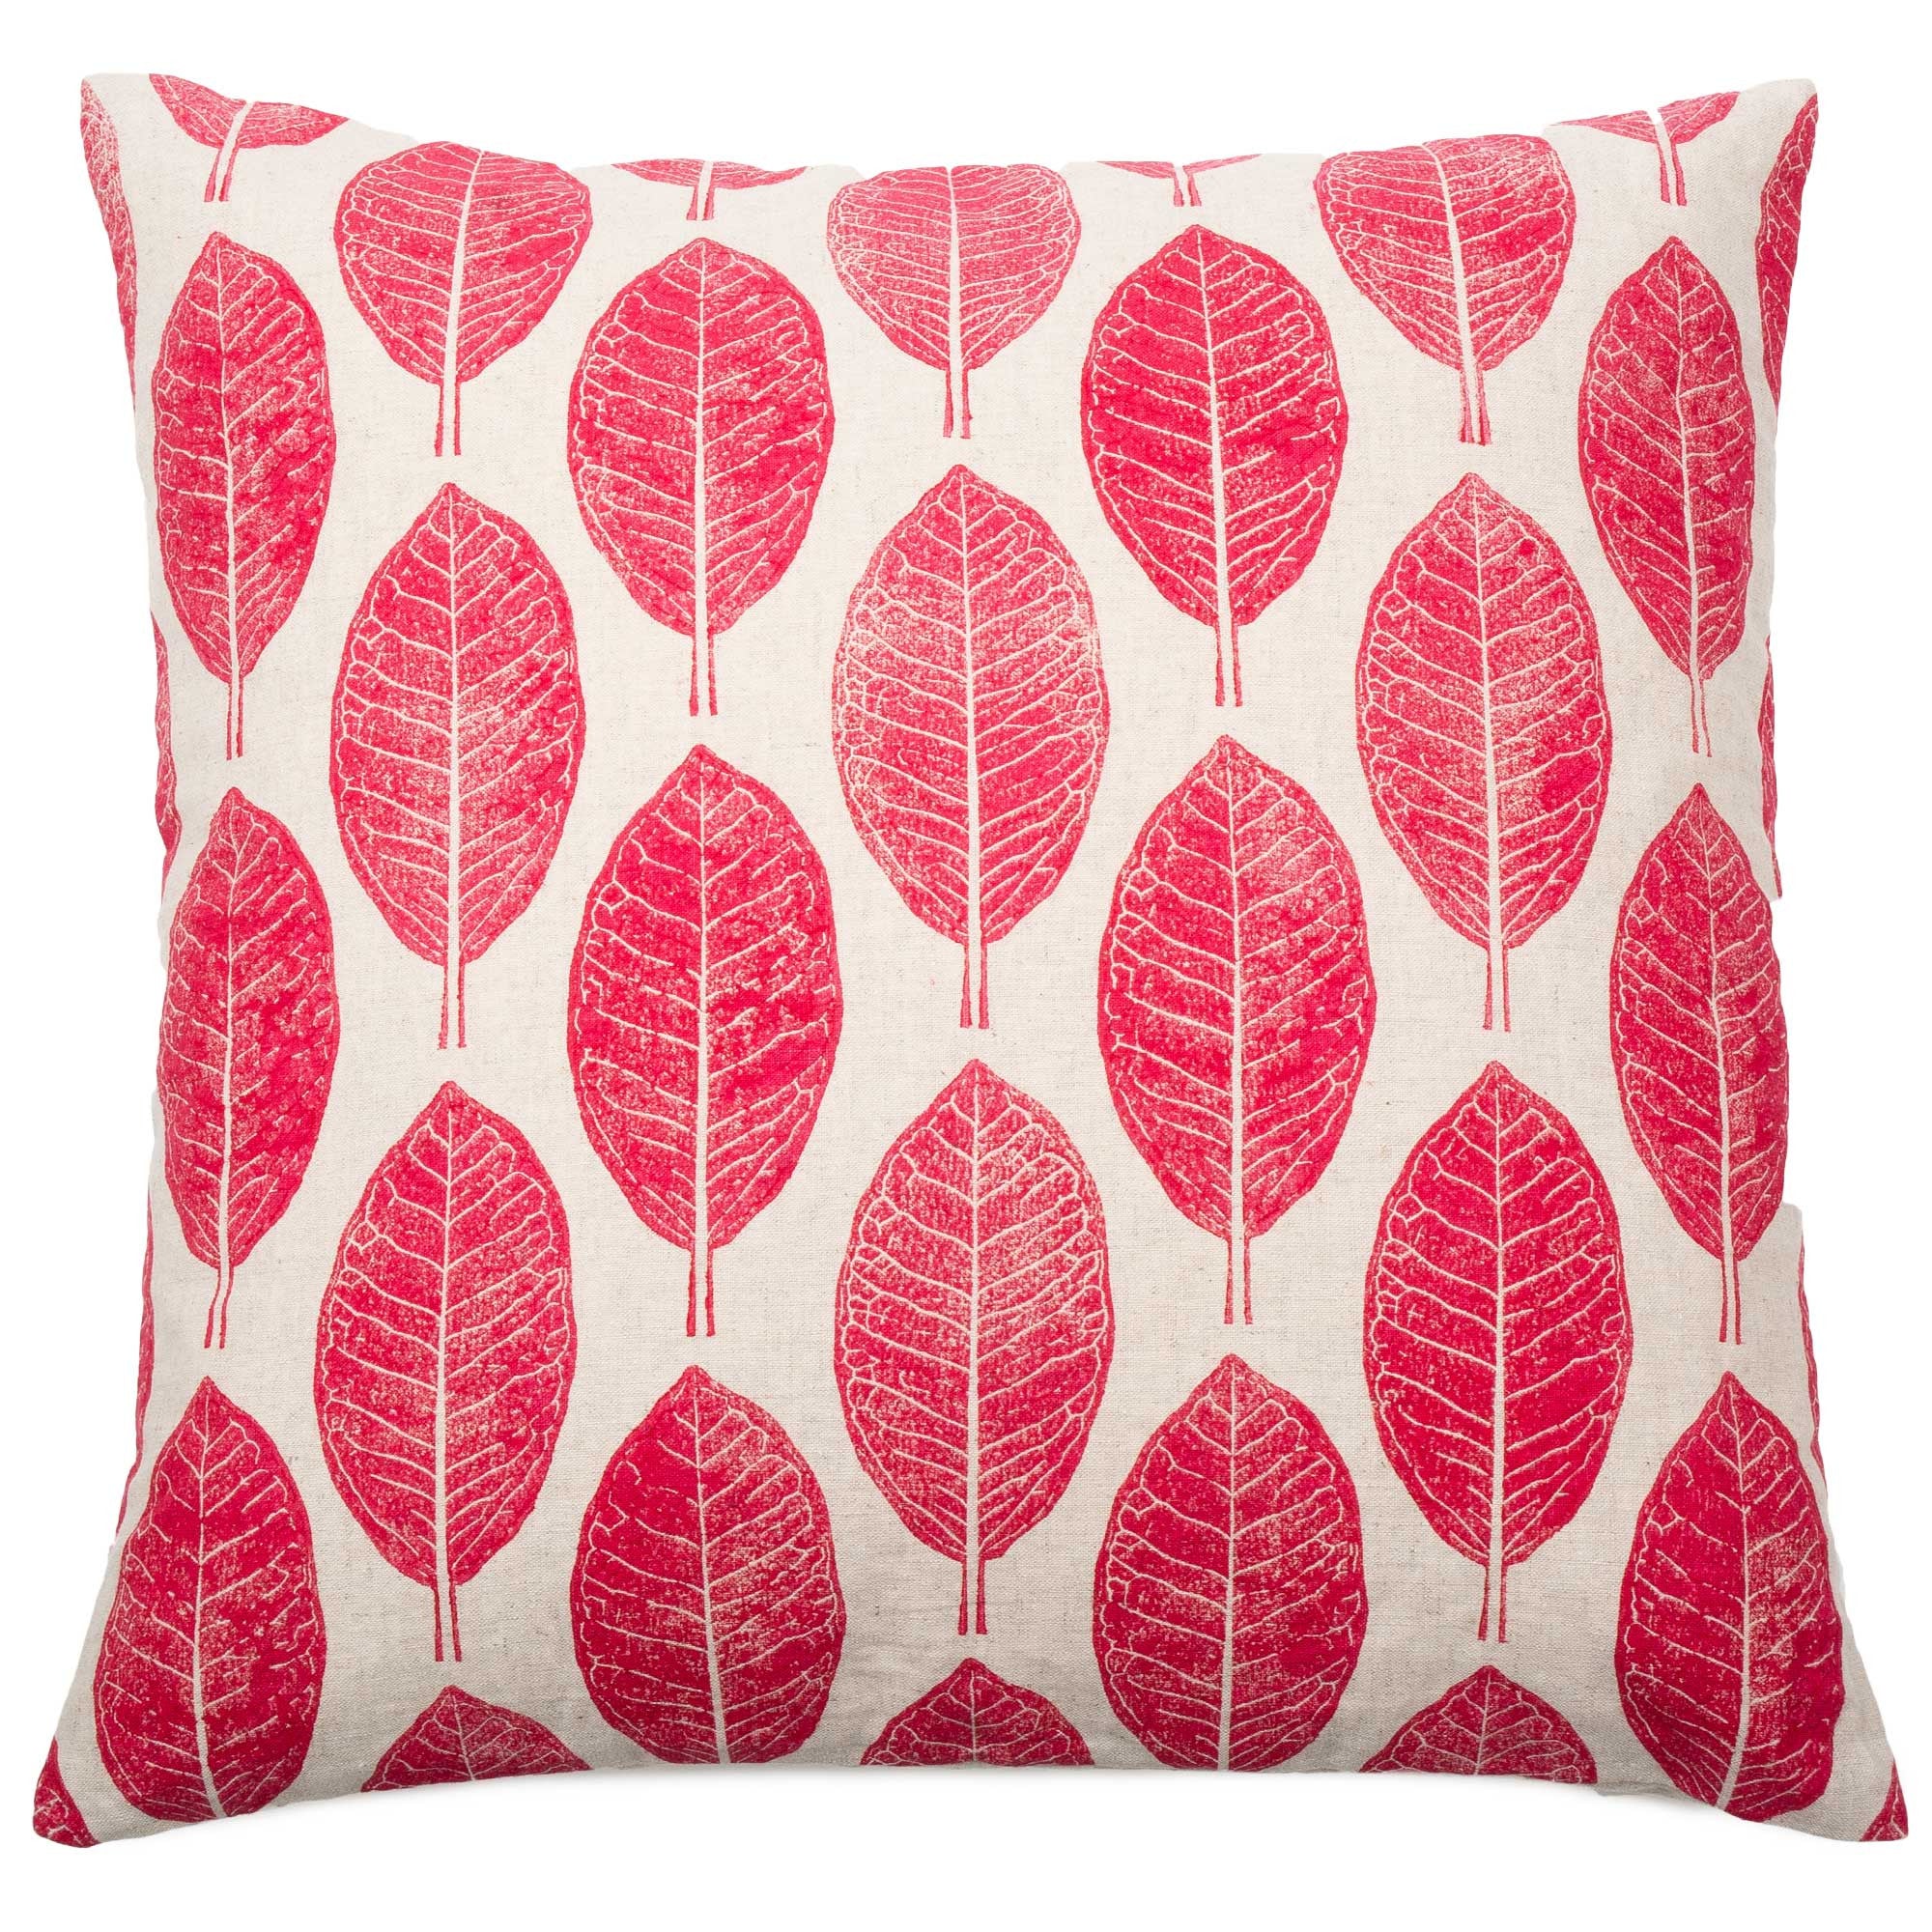 Pink Leaves cushion